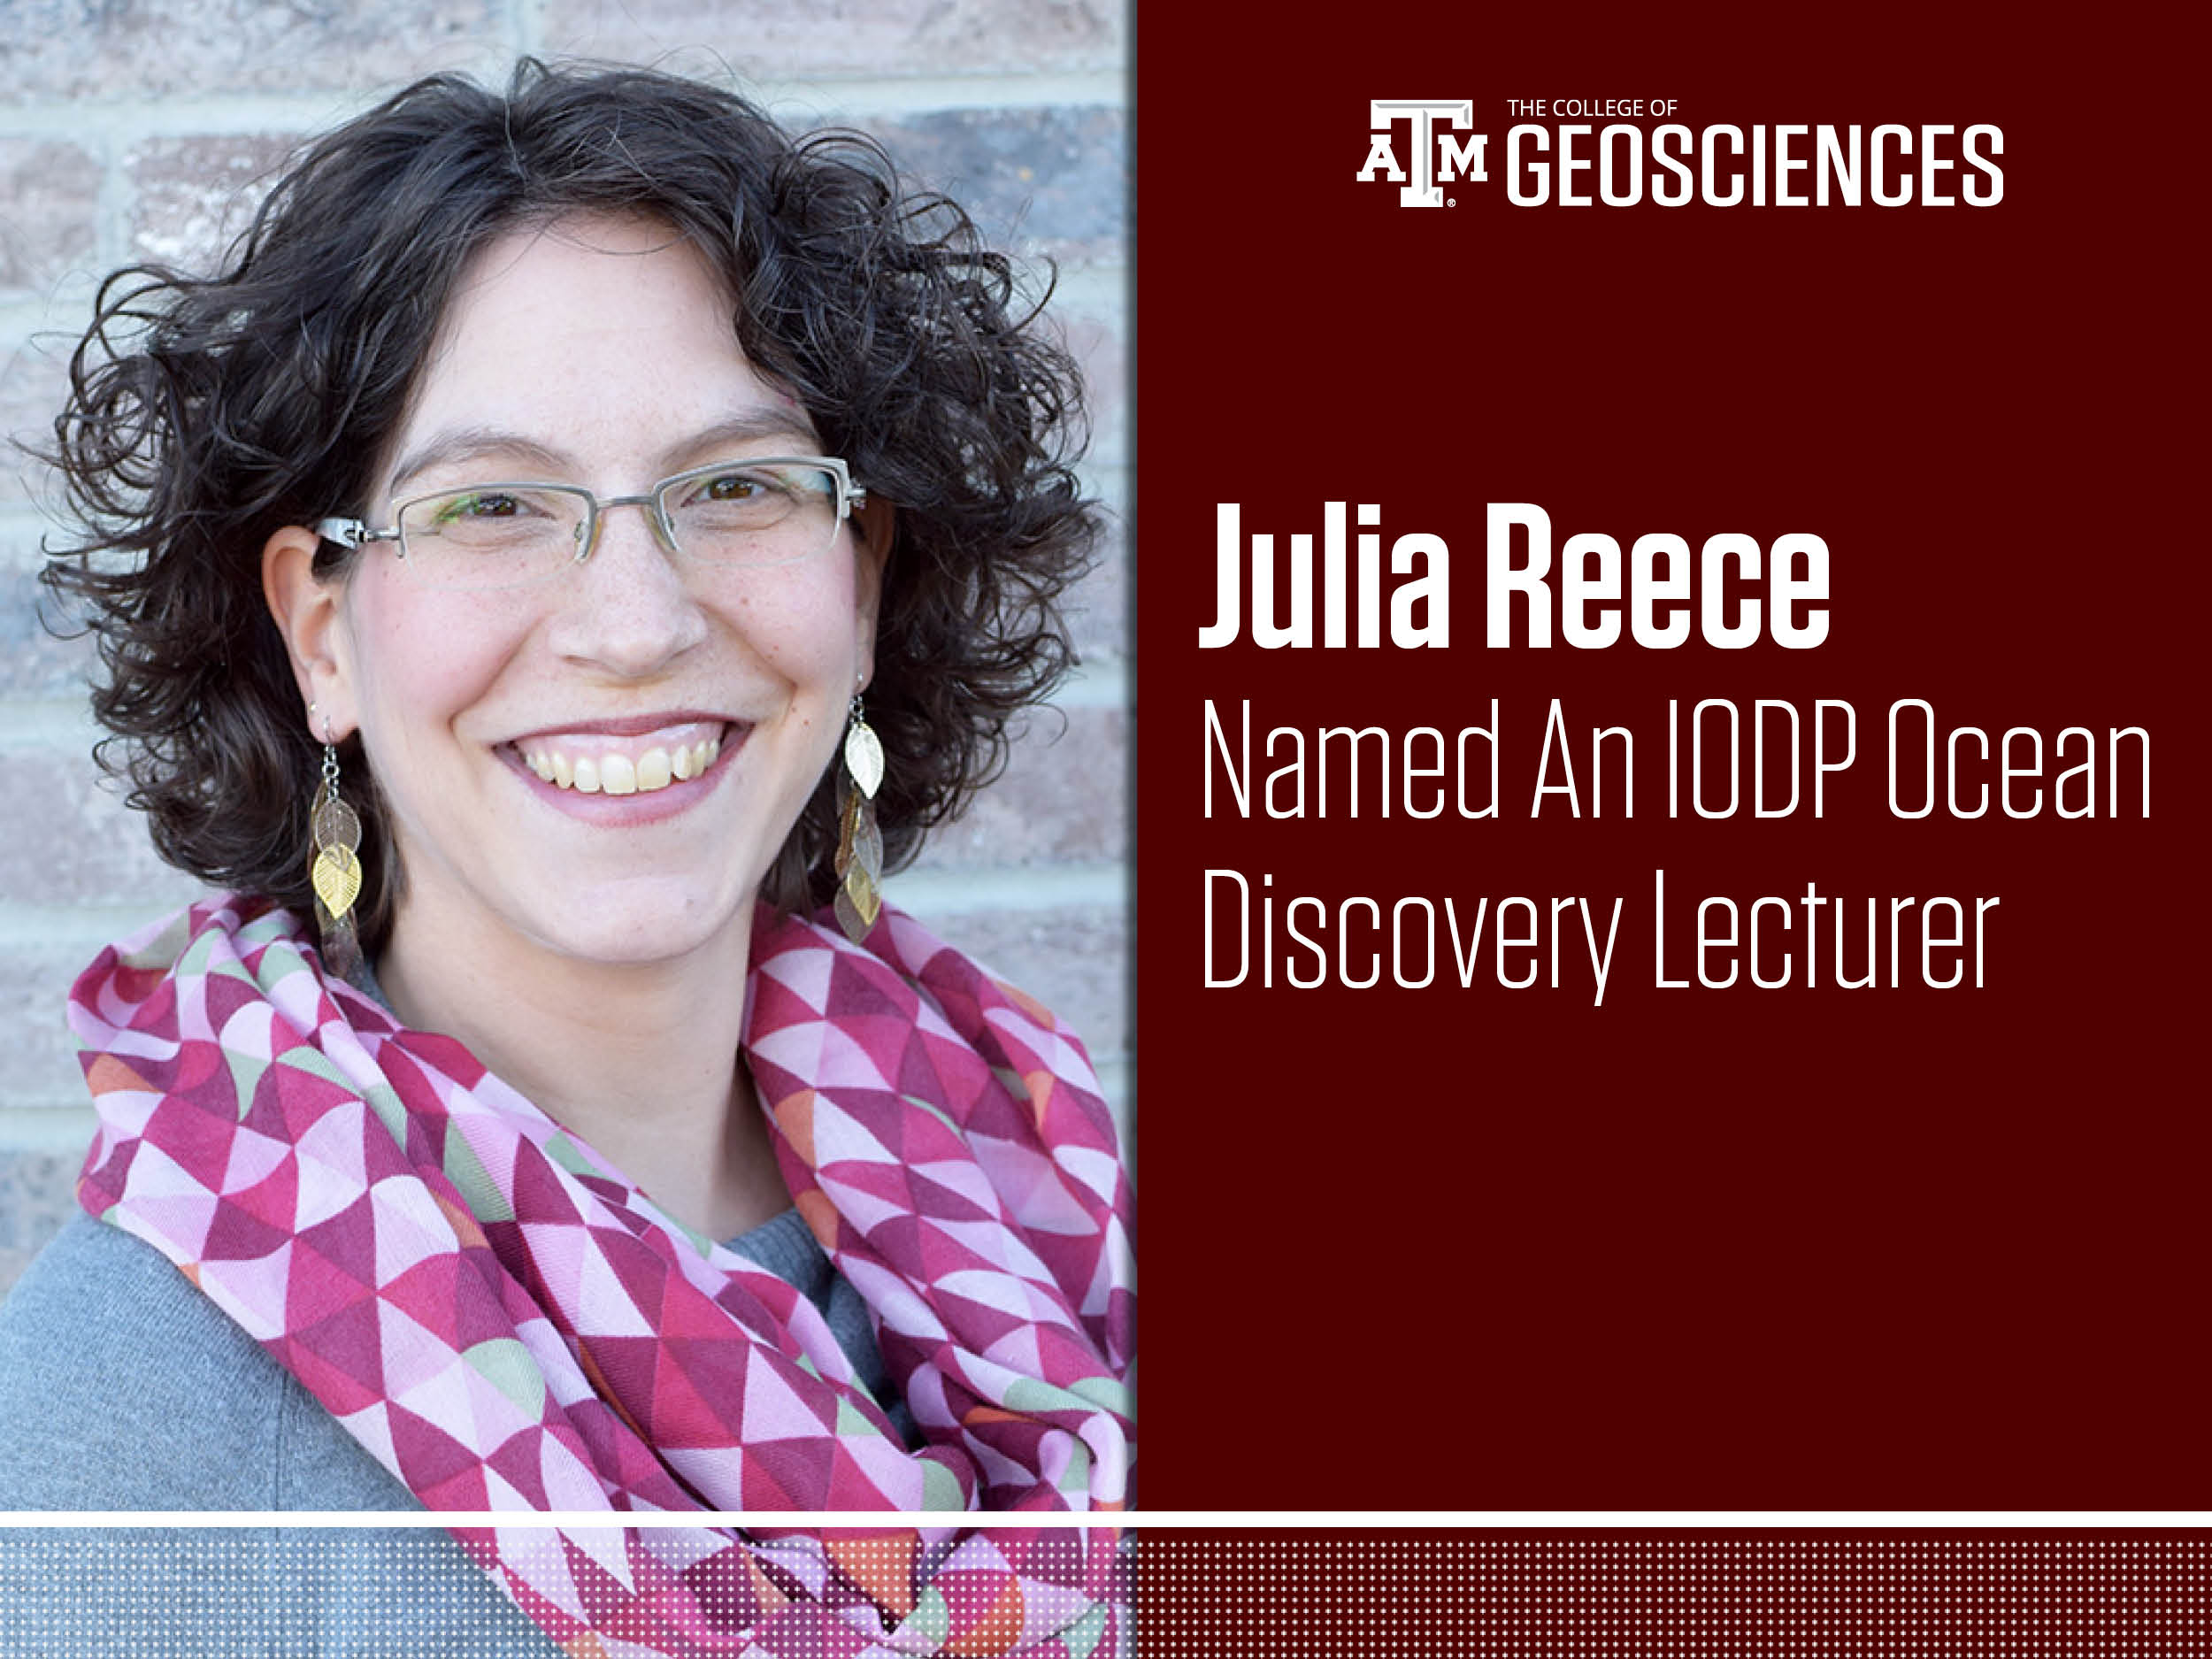 Dr. Julia Reece Named an IODP Ocean Discovery Lecturer